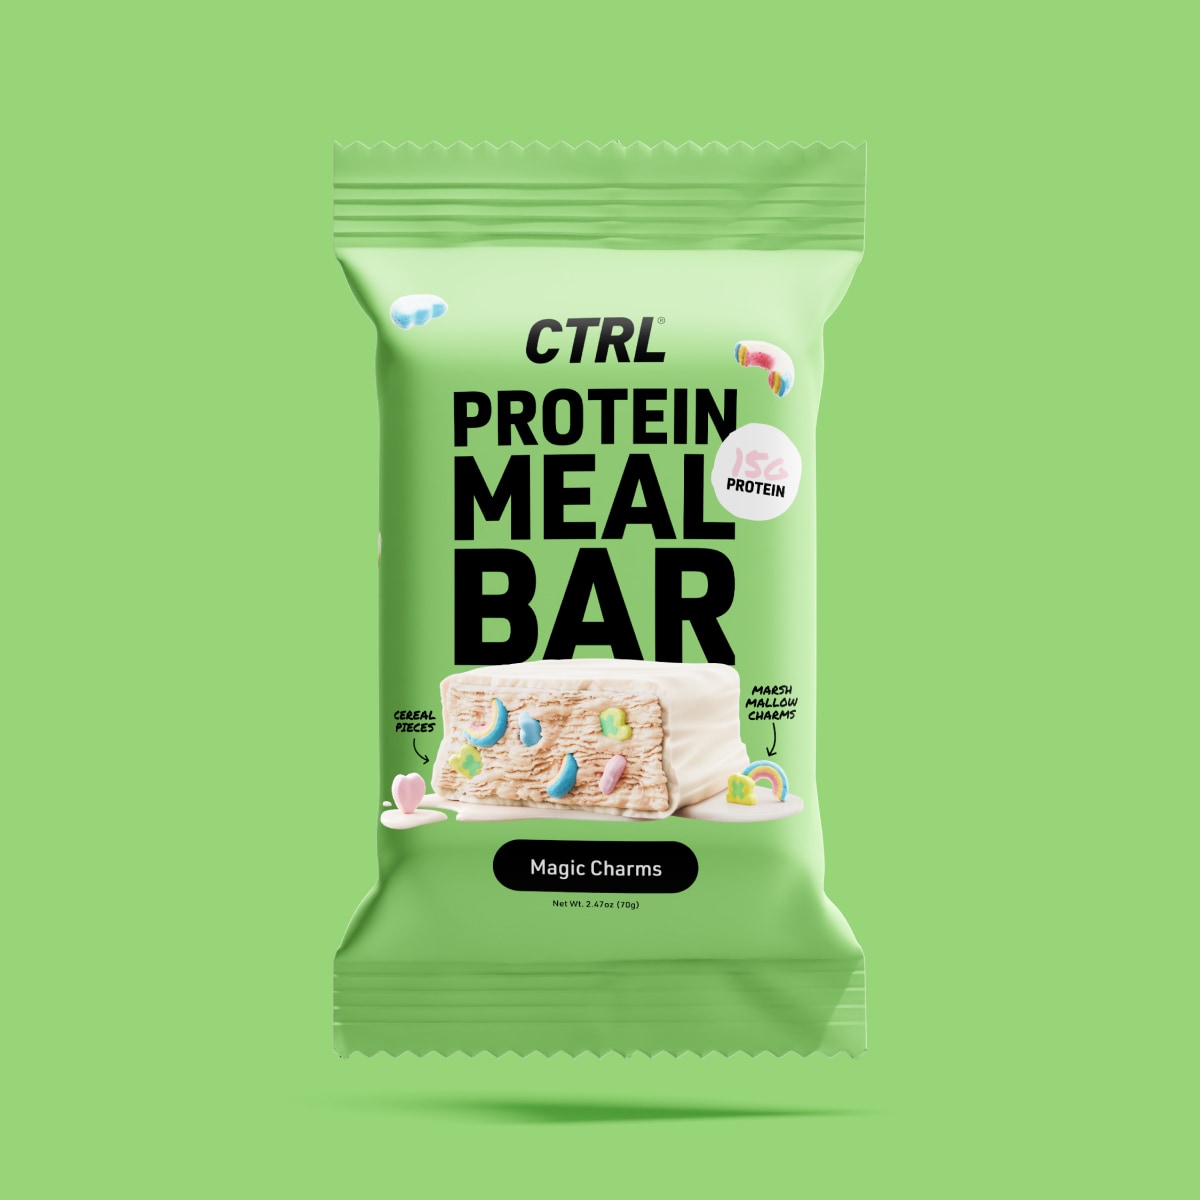 Magic Charms - Protein Meal Bar (1 Bar)